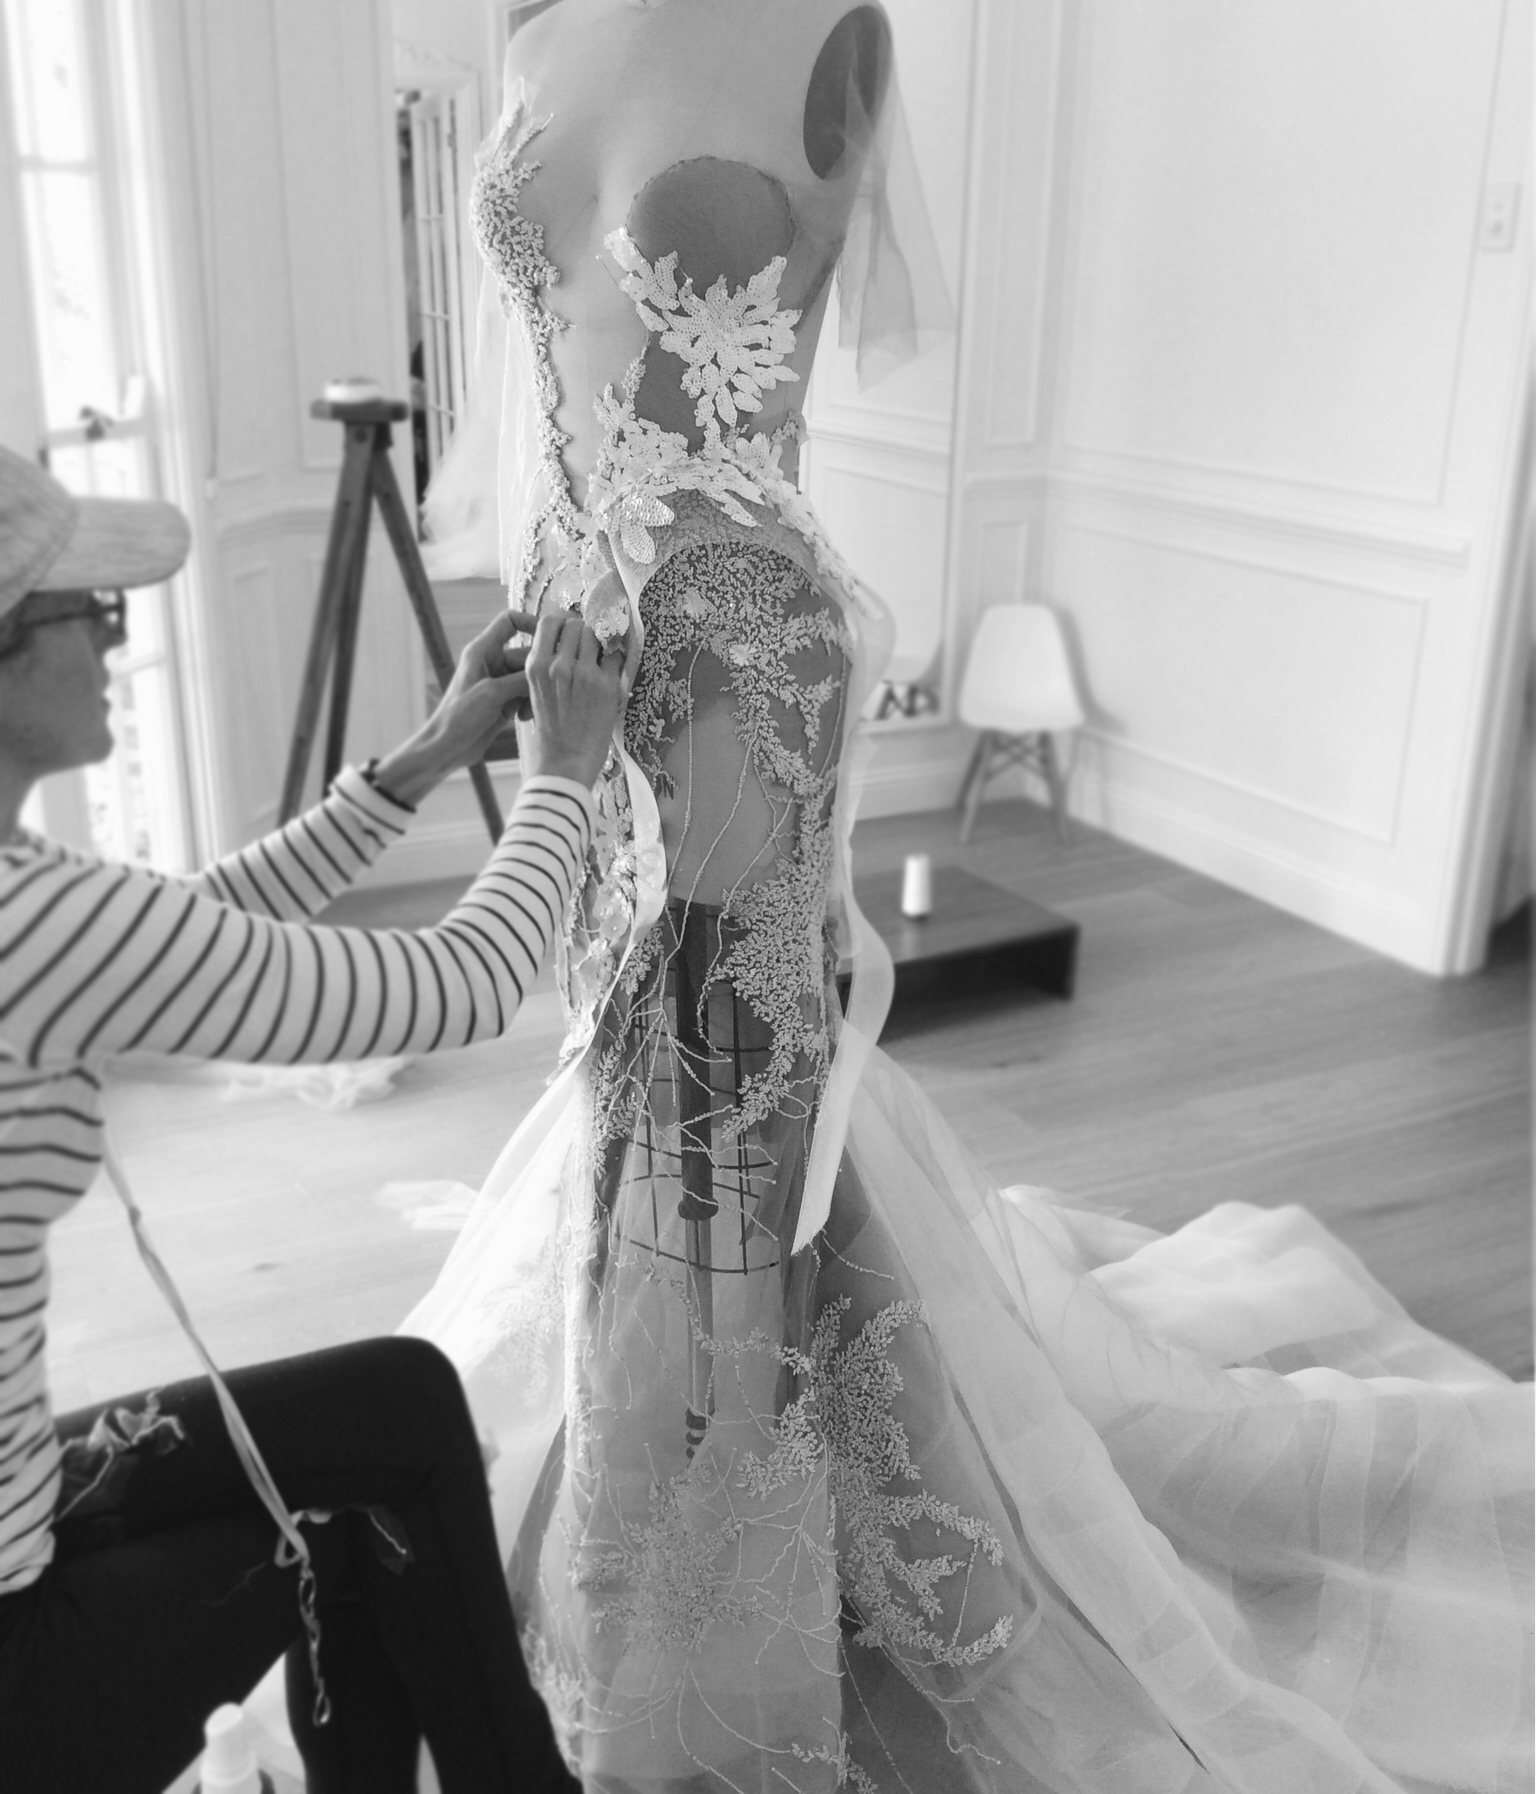 MXM Couture Wedding Dress Designer Hand Sewn Yesterday Creative Letterpress Blog Post